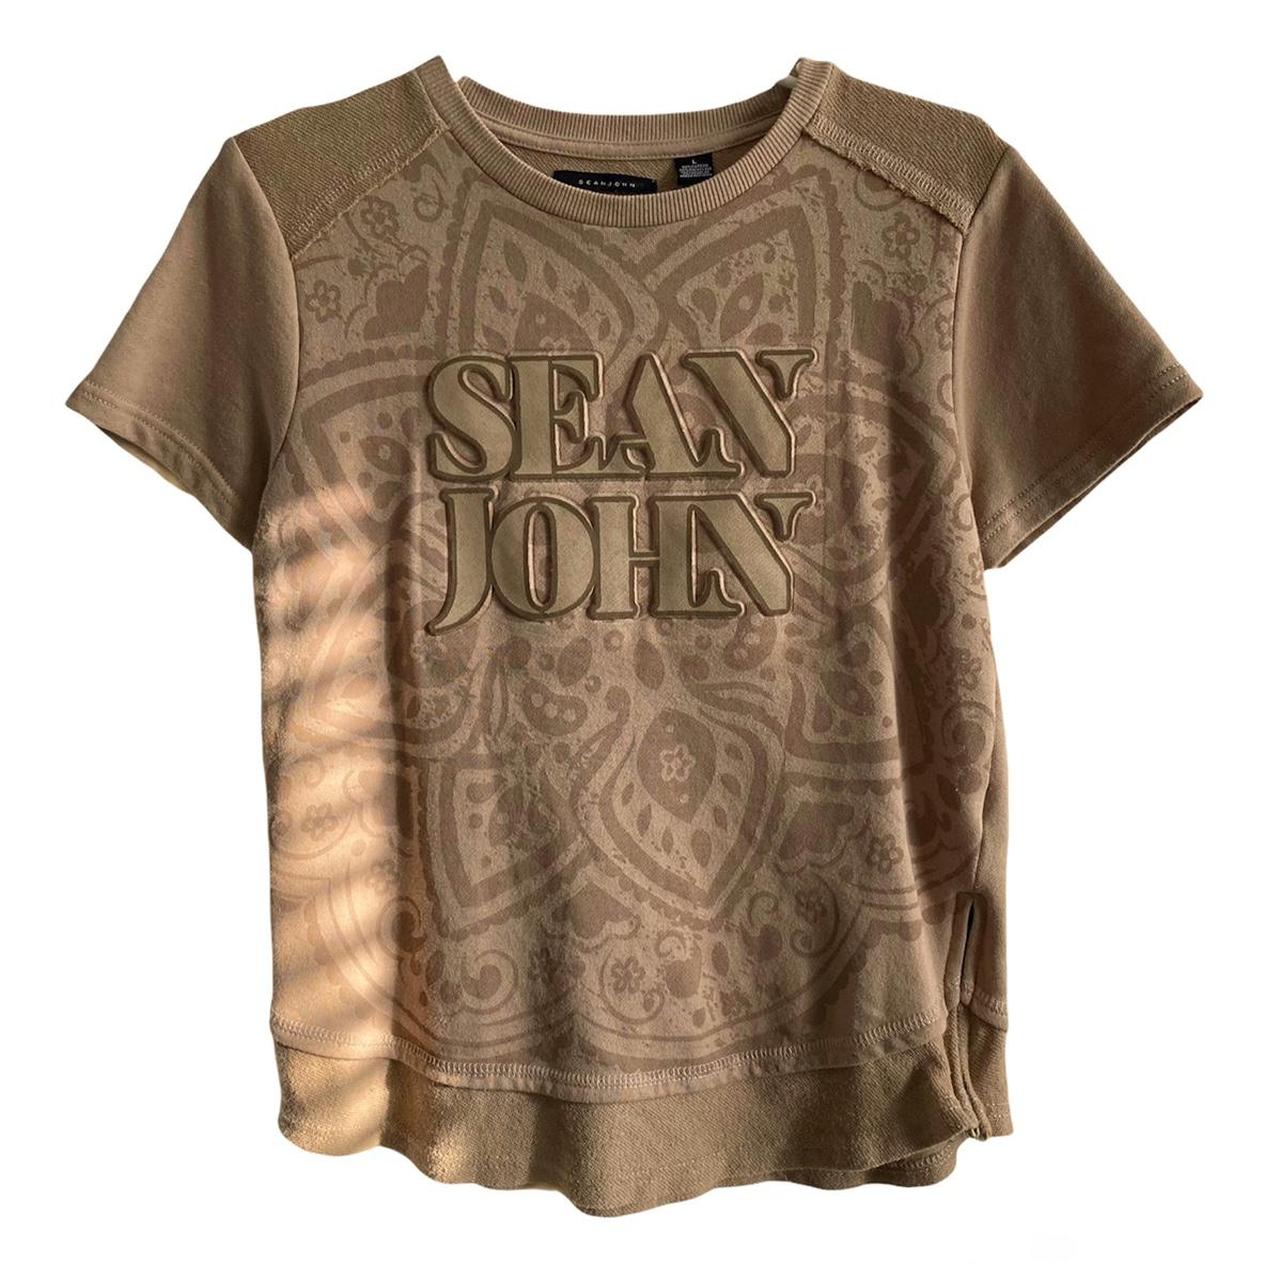 Sean John Men's Brown T-shirt